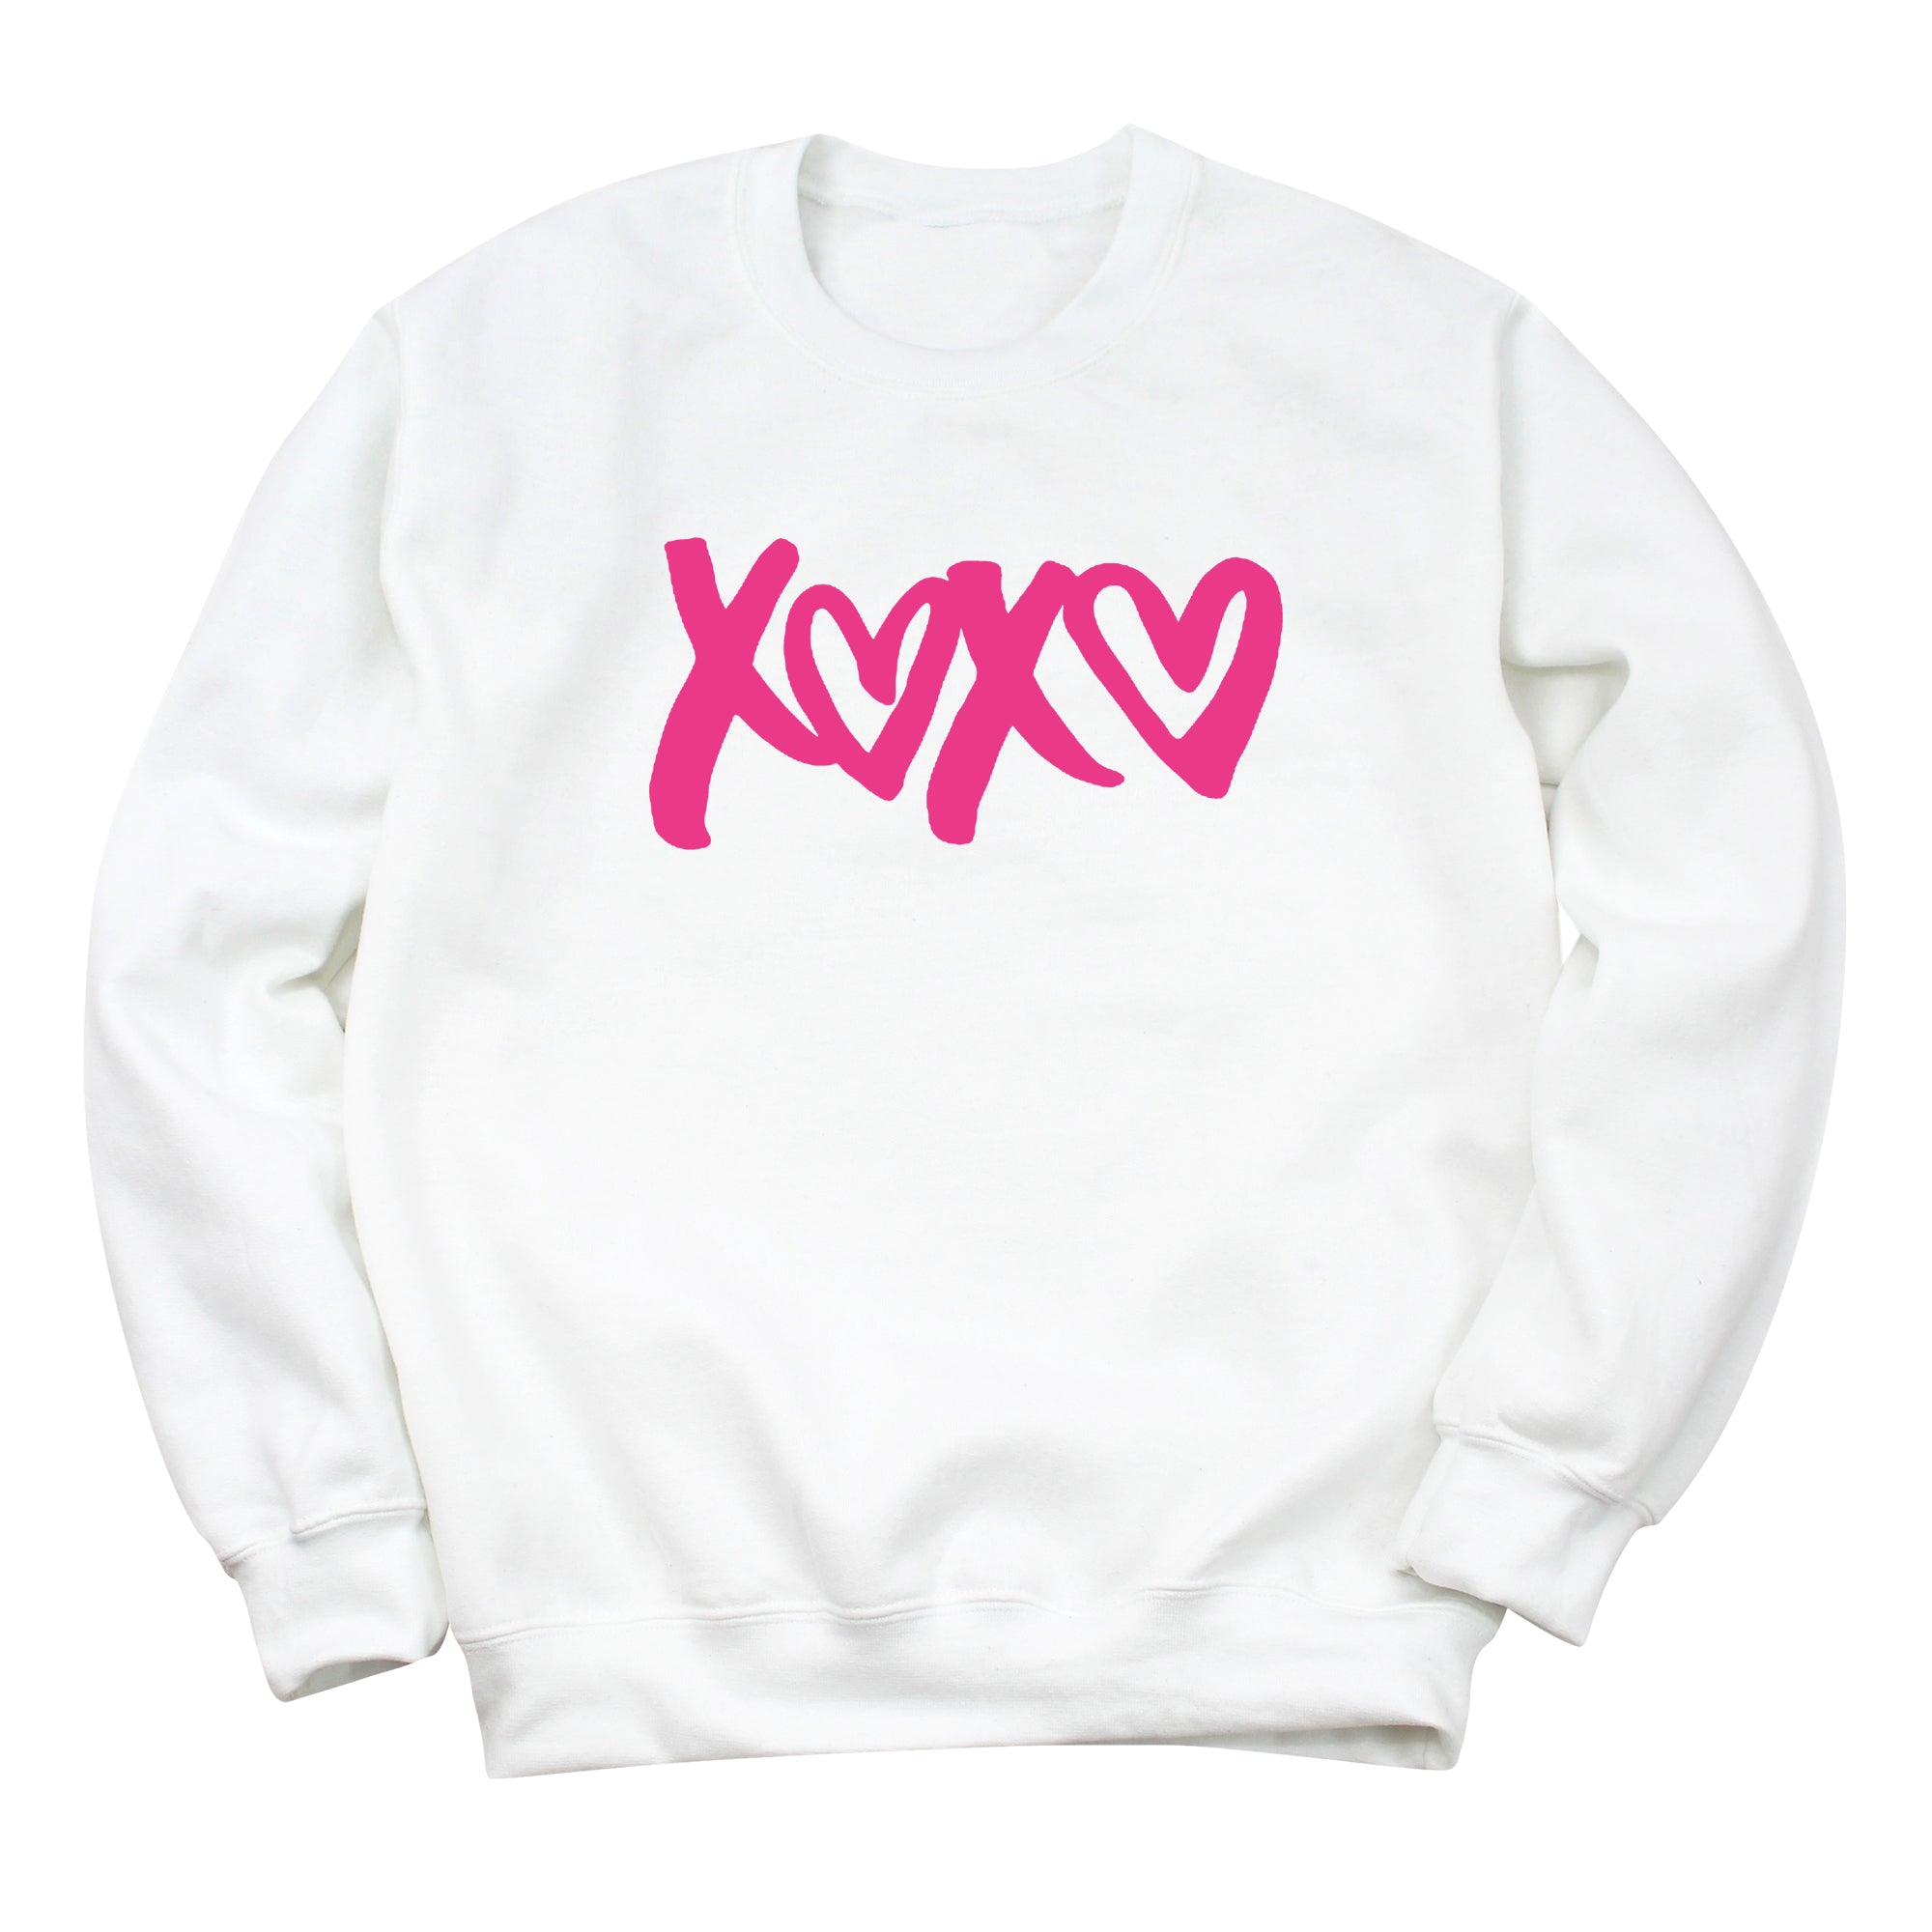 XOXO (Valentine's Day) Sweatshirt